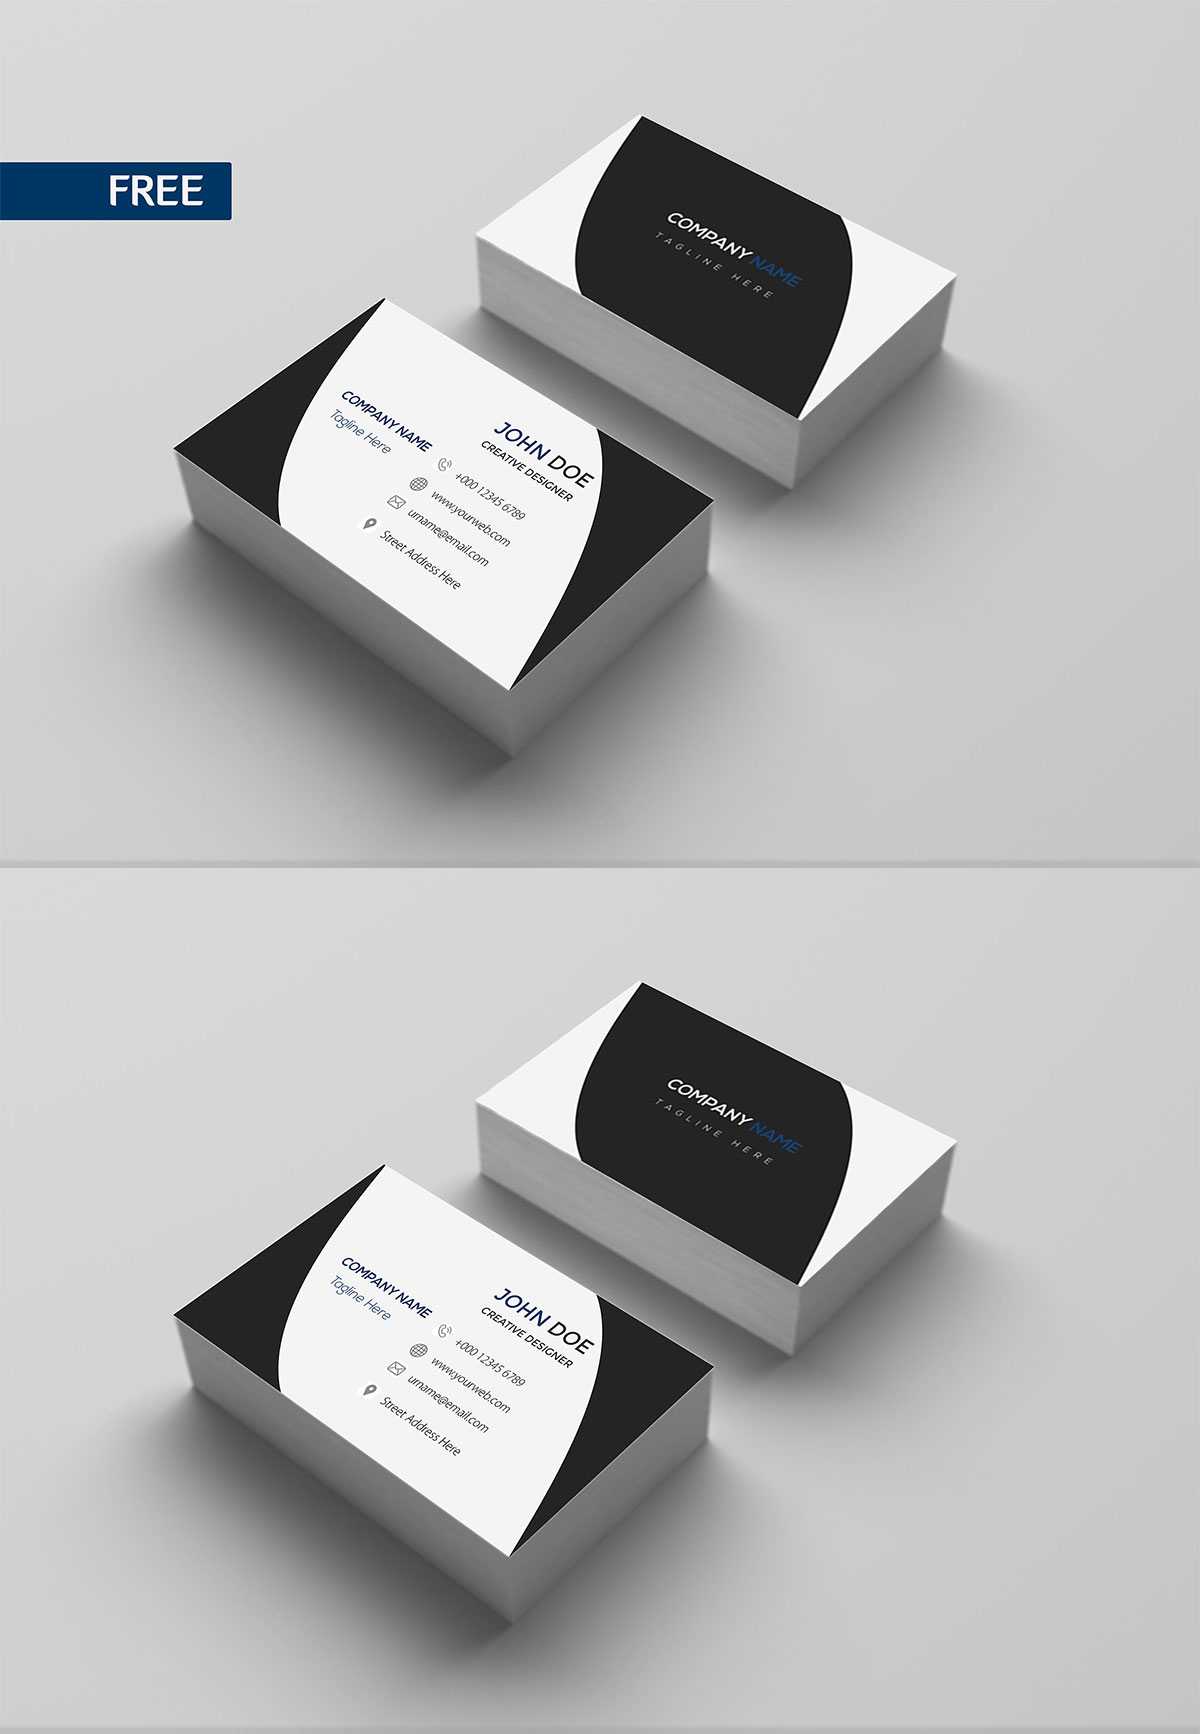 Free Print Design Business Card Template – Creativetacos Inside Free Template Business Cards To Print